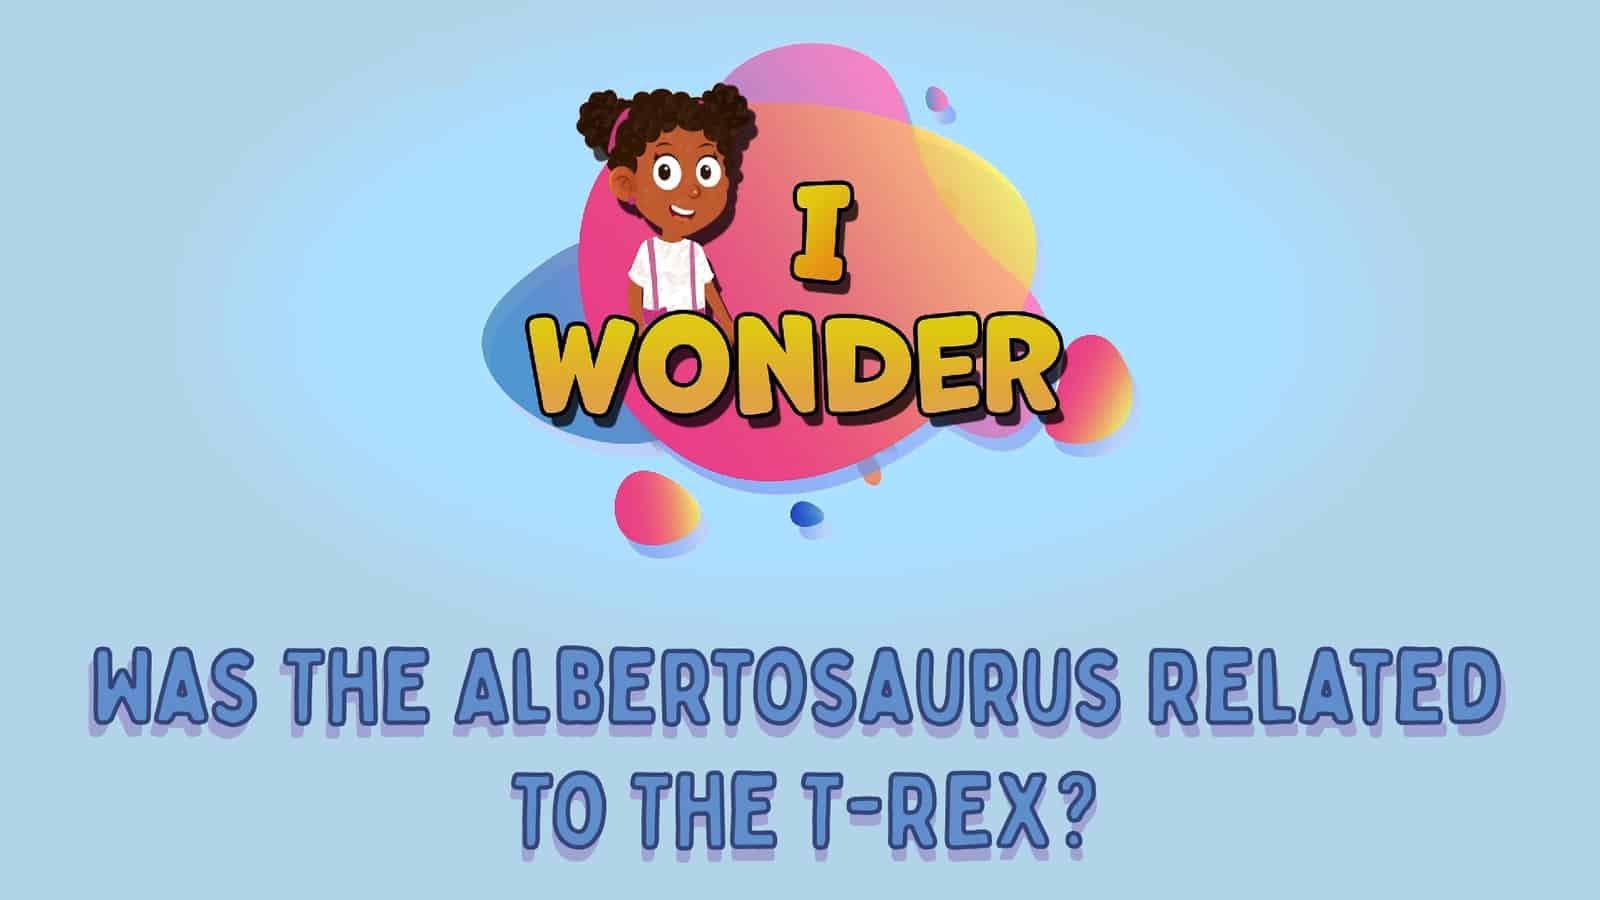 Albertosaurus Related To The T-REX LearningMole